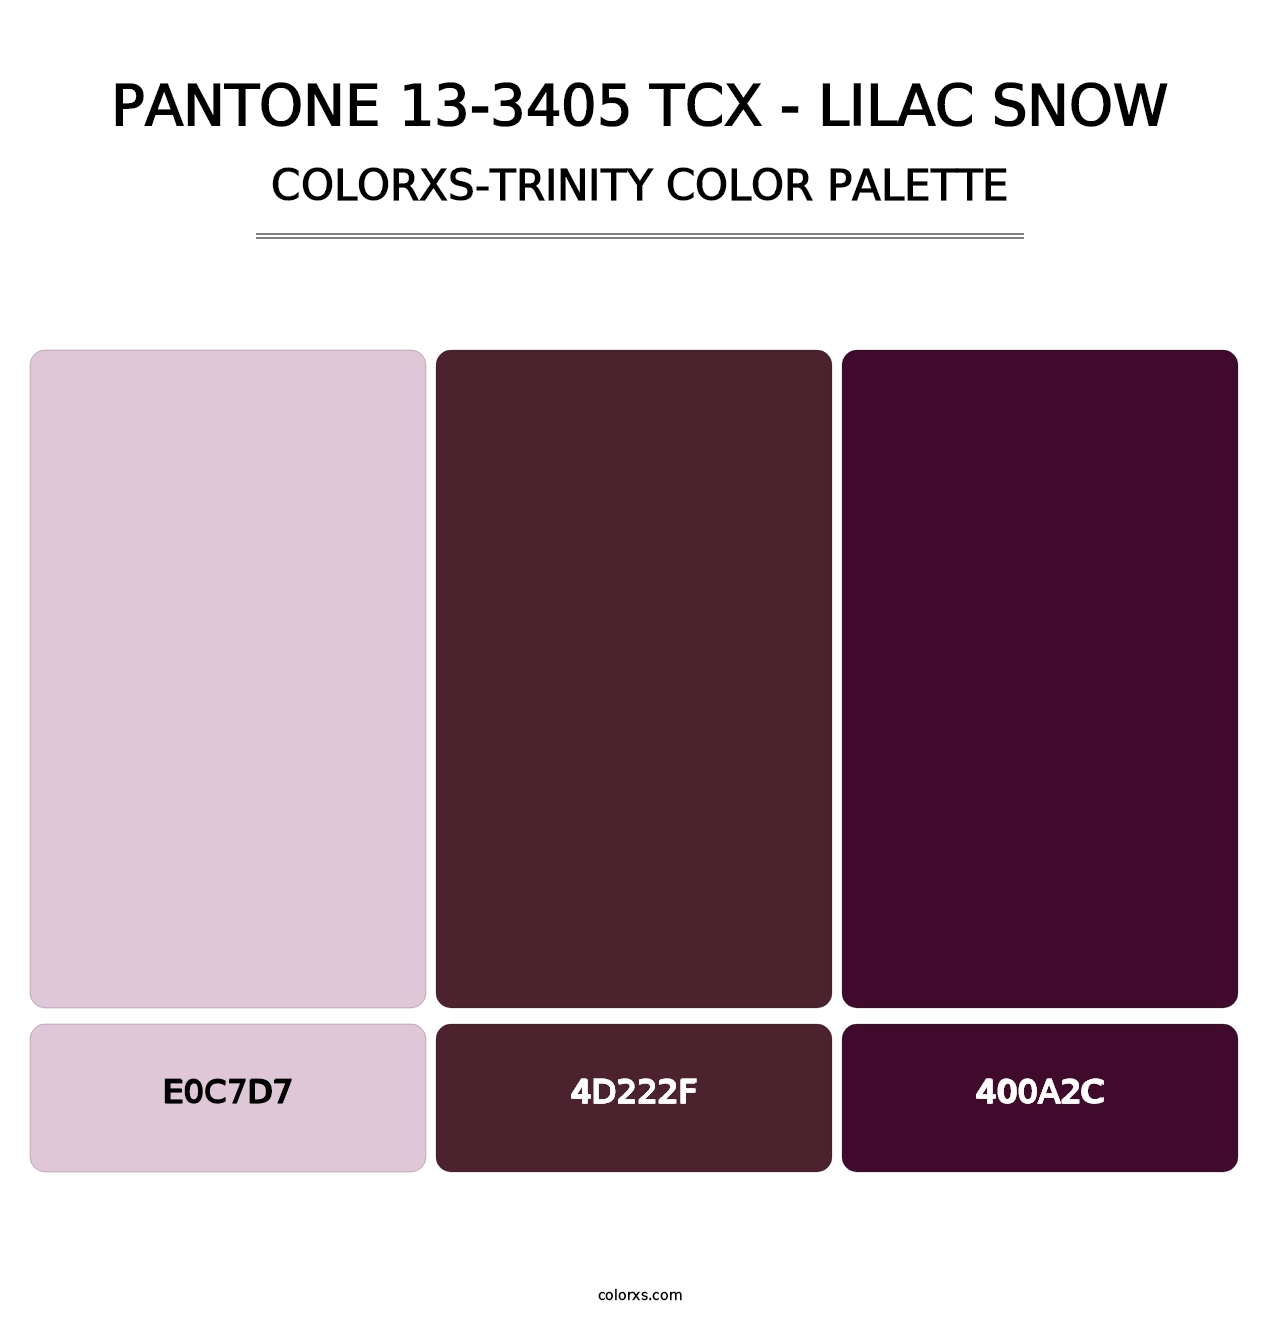 PANTONE 13-3405 TCX - Lilac Snow - Colorxs Trinity Palette